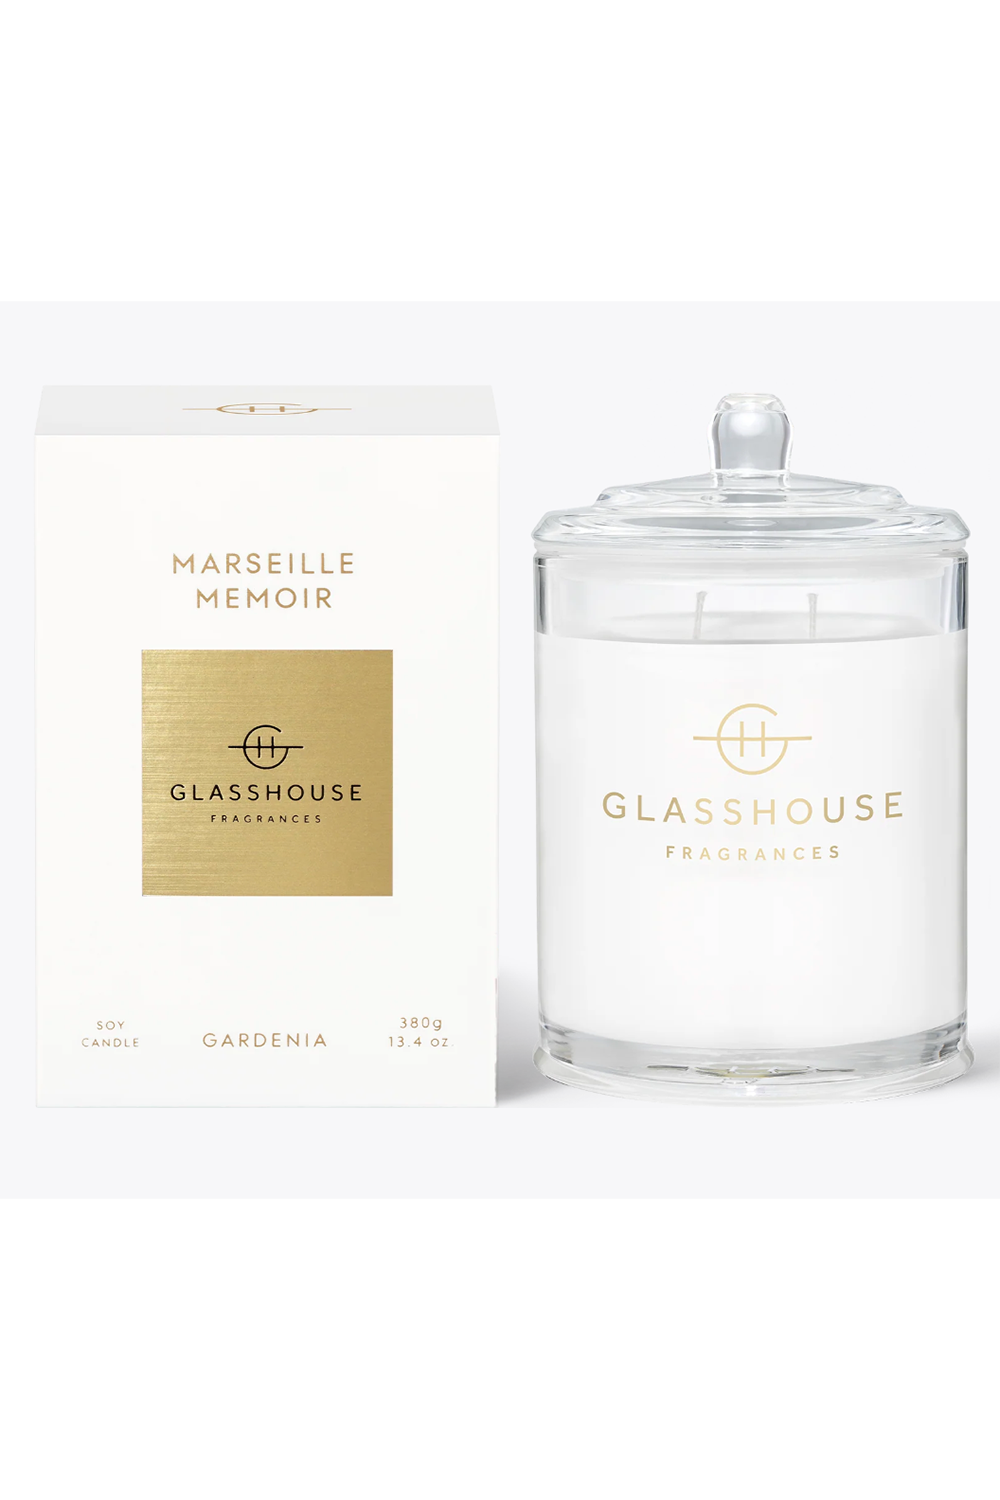 Glasshouse Fragrance Candle - Marseille Memoir